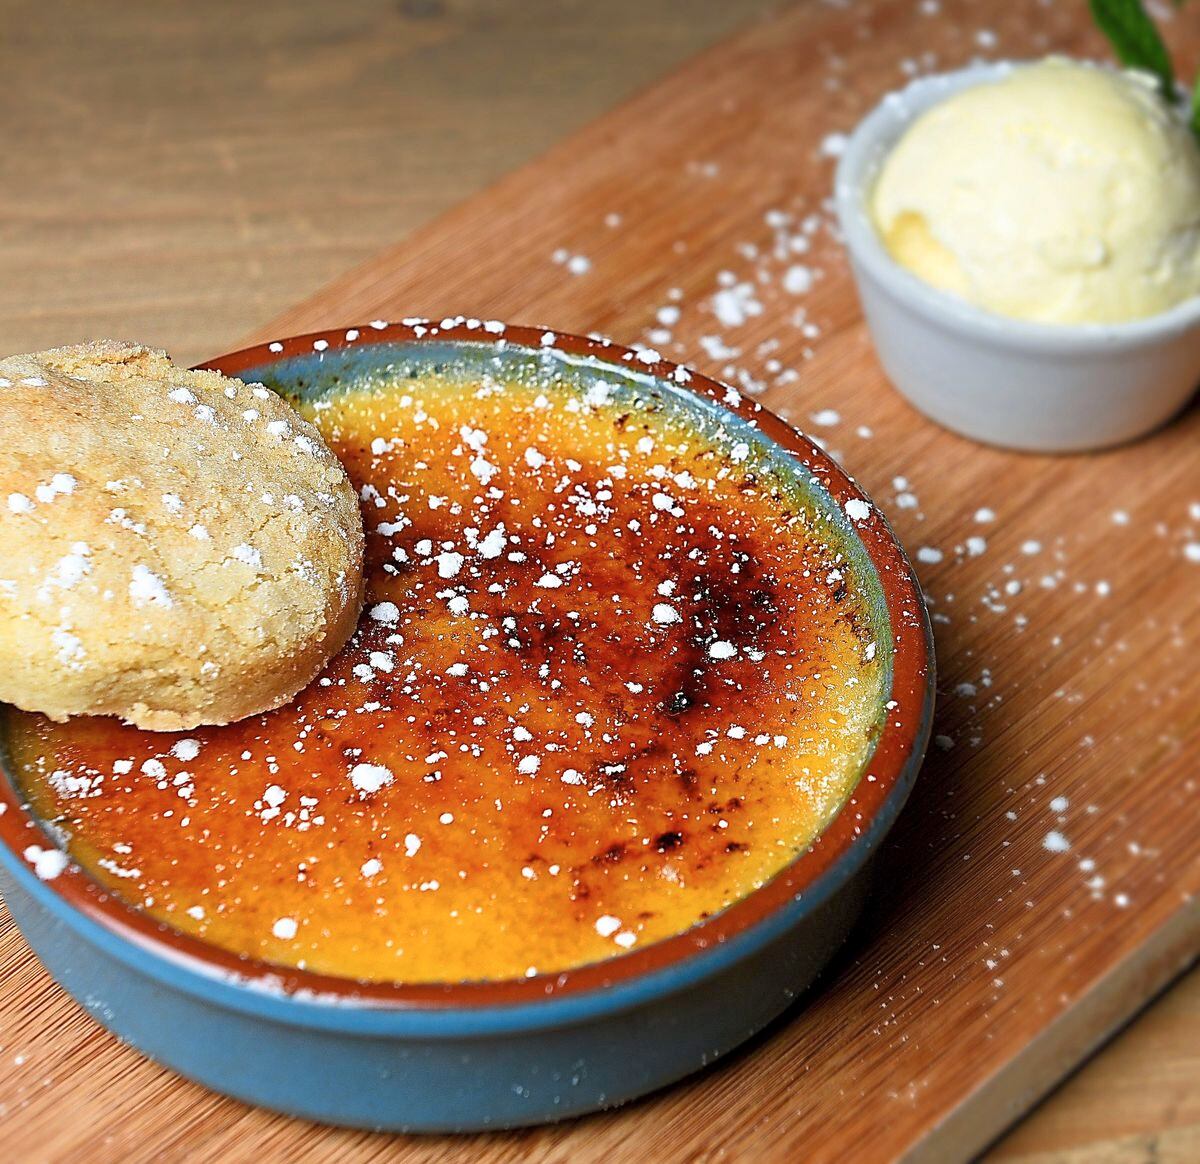 Crunch bunch – the crème brûlée dessert